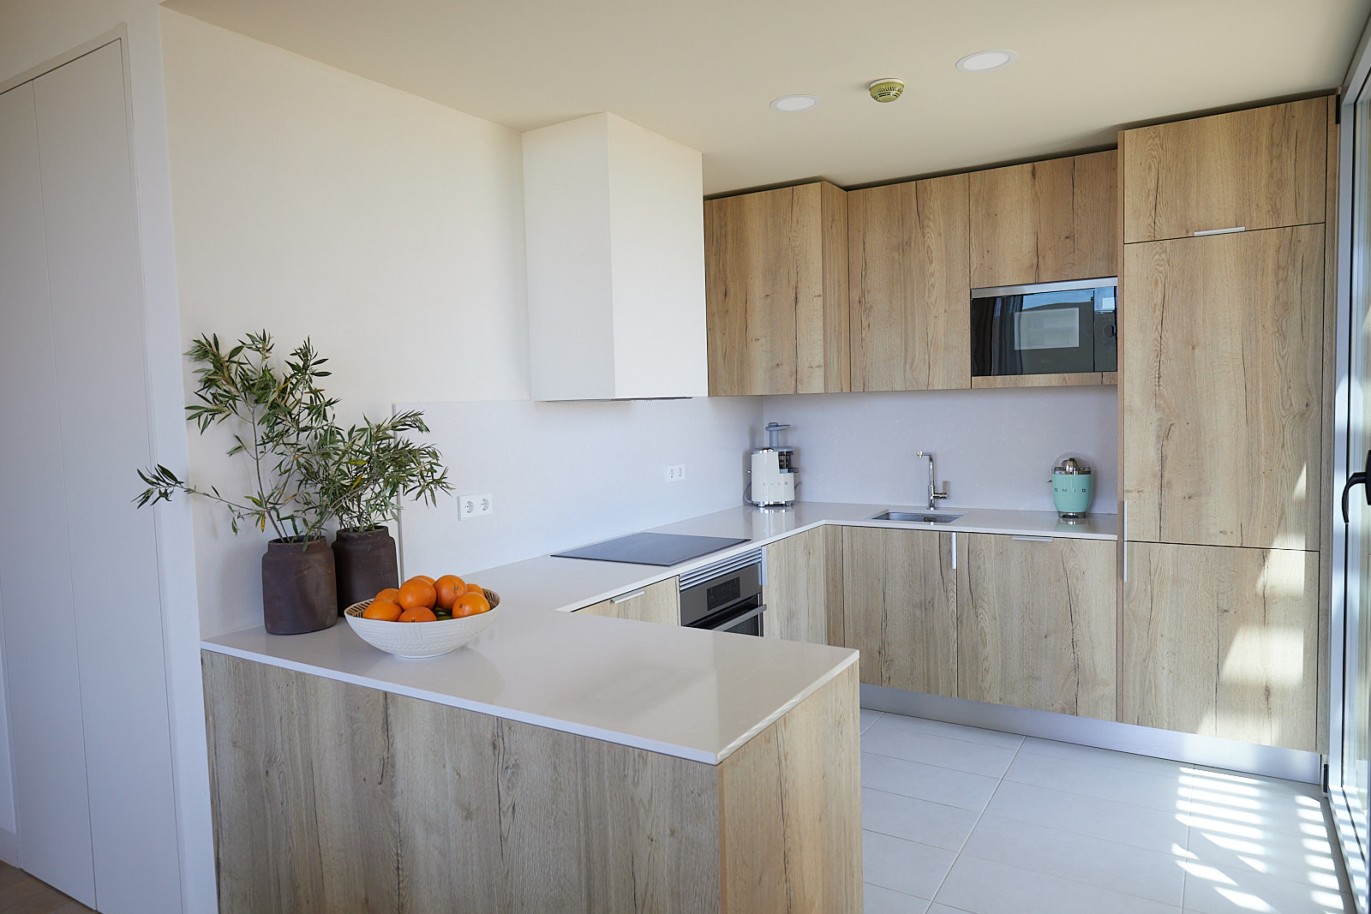 2 bedroom apartment in resort, for sale in Porches, Algarve_228732